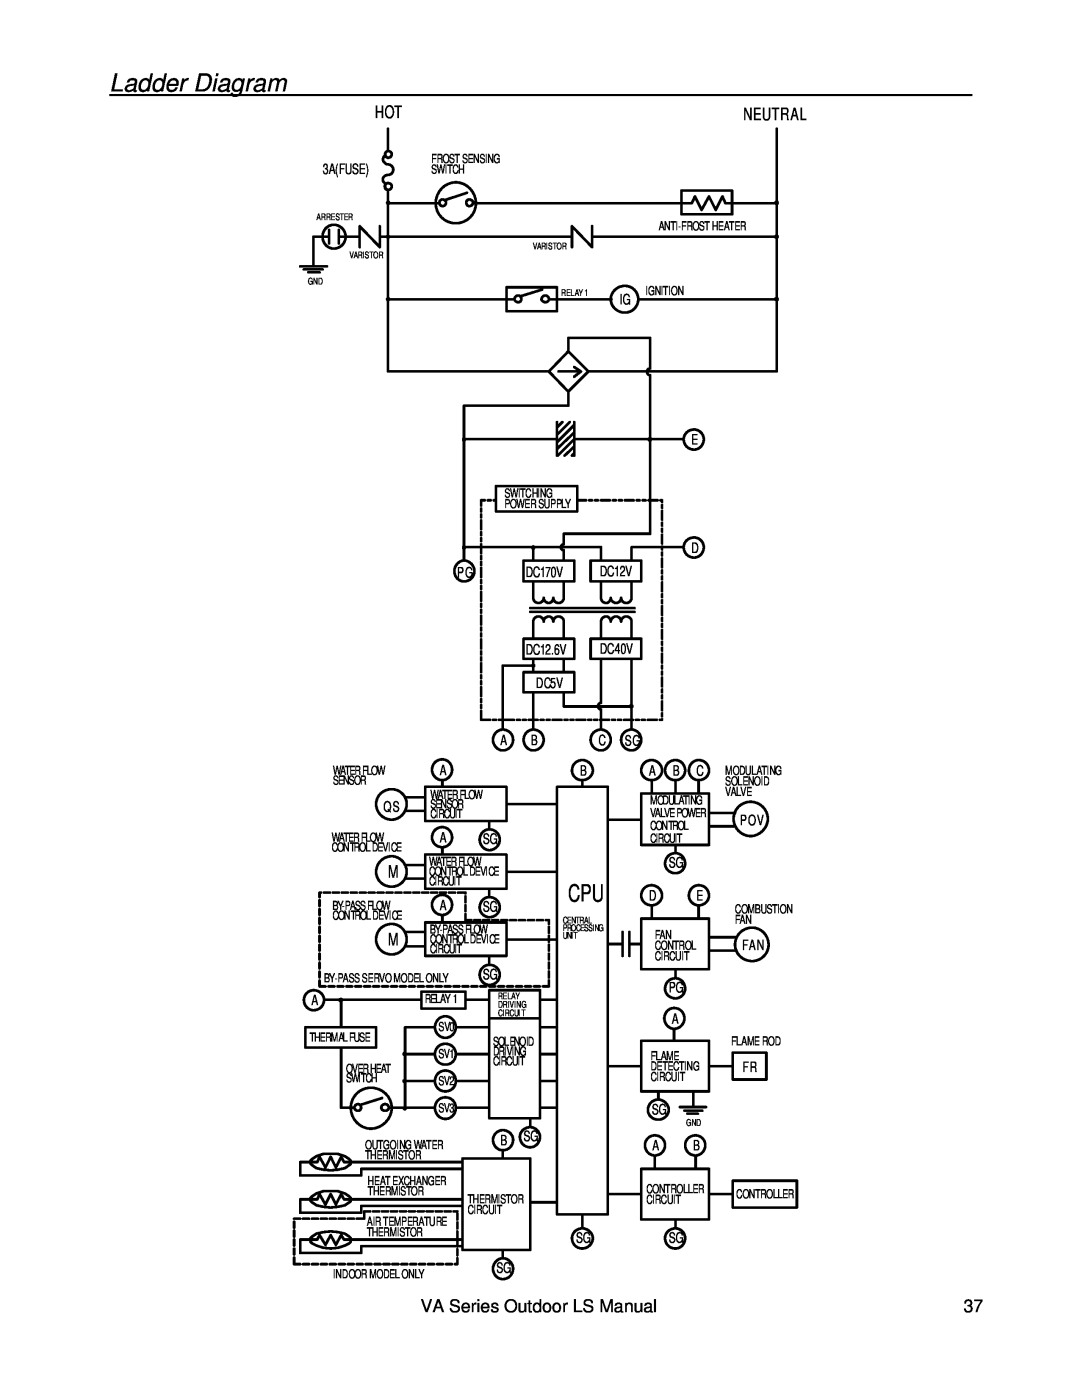 Rinnai R98LSE-ASME installation manual Ladder Diagram 